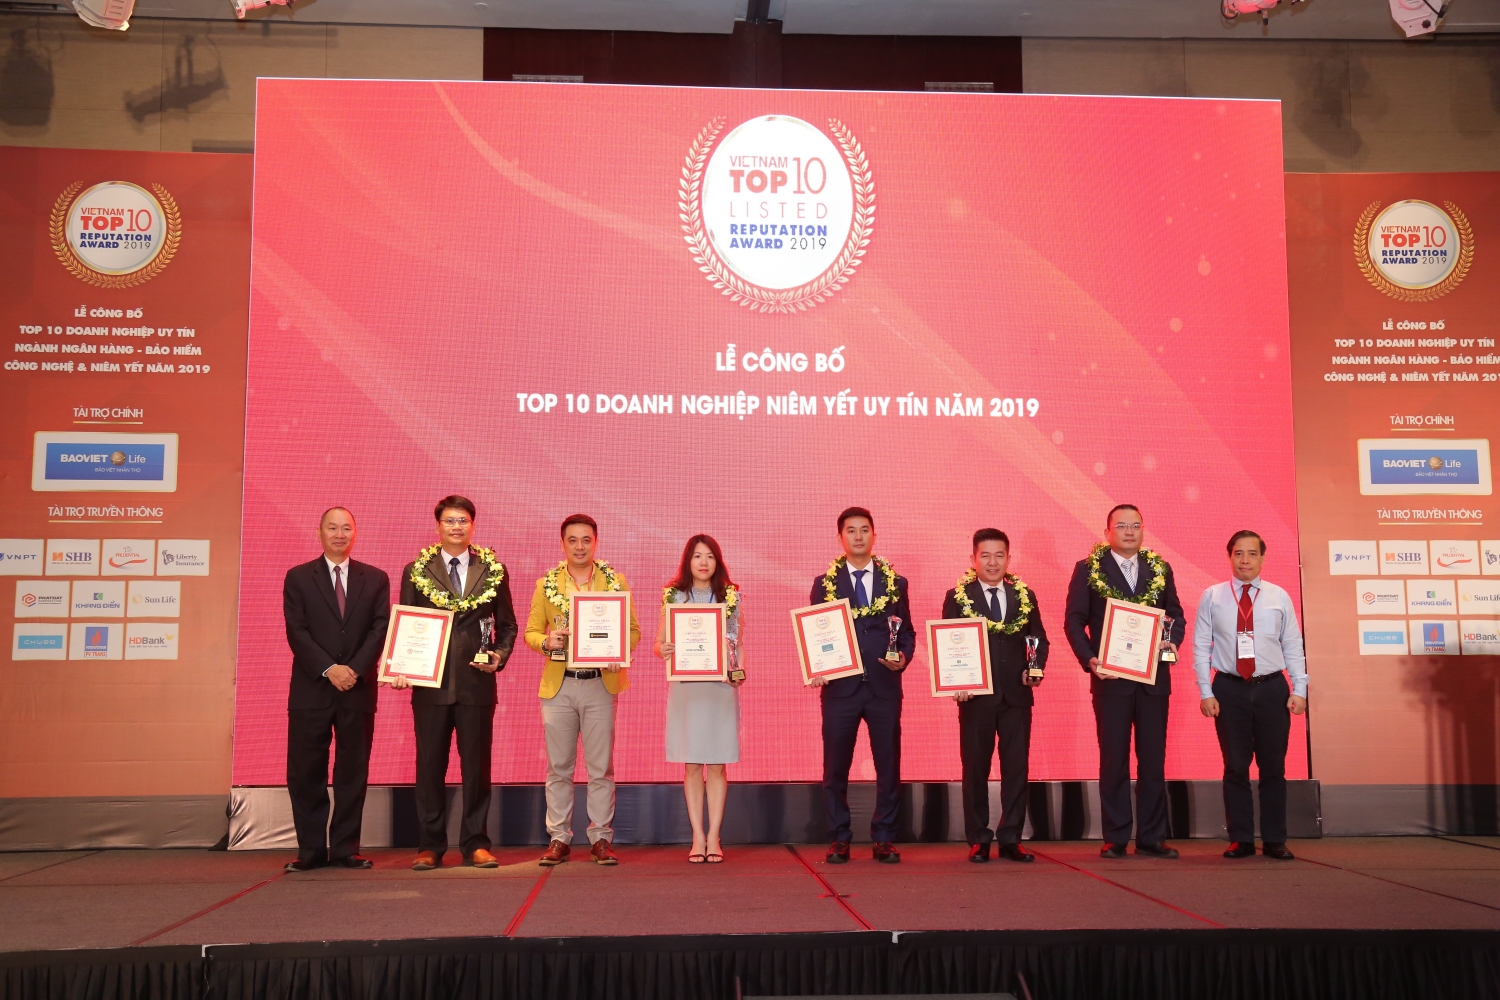 pvtrans duoc vinh danh top 10 doanh nghiep niem yet uy tin nam 2019